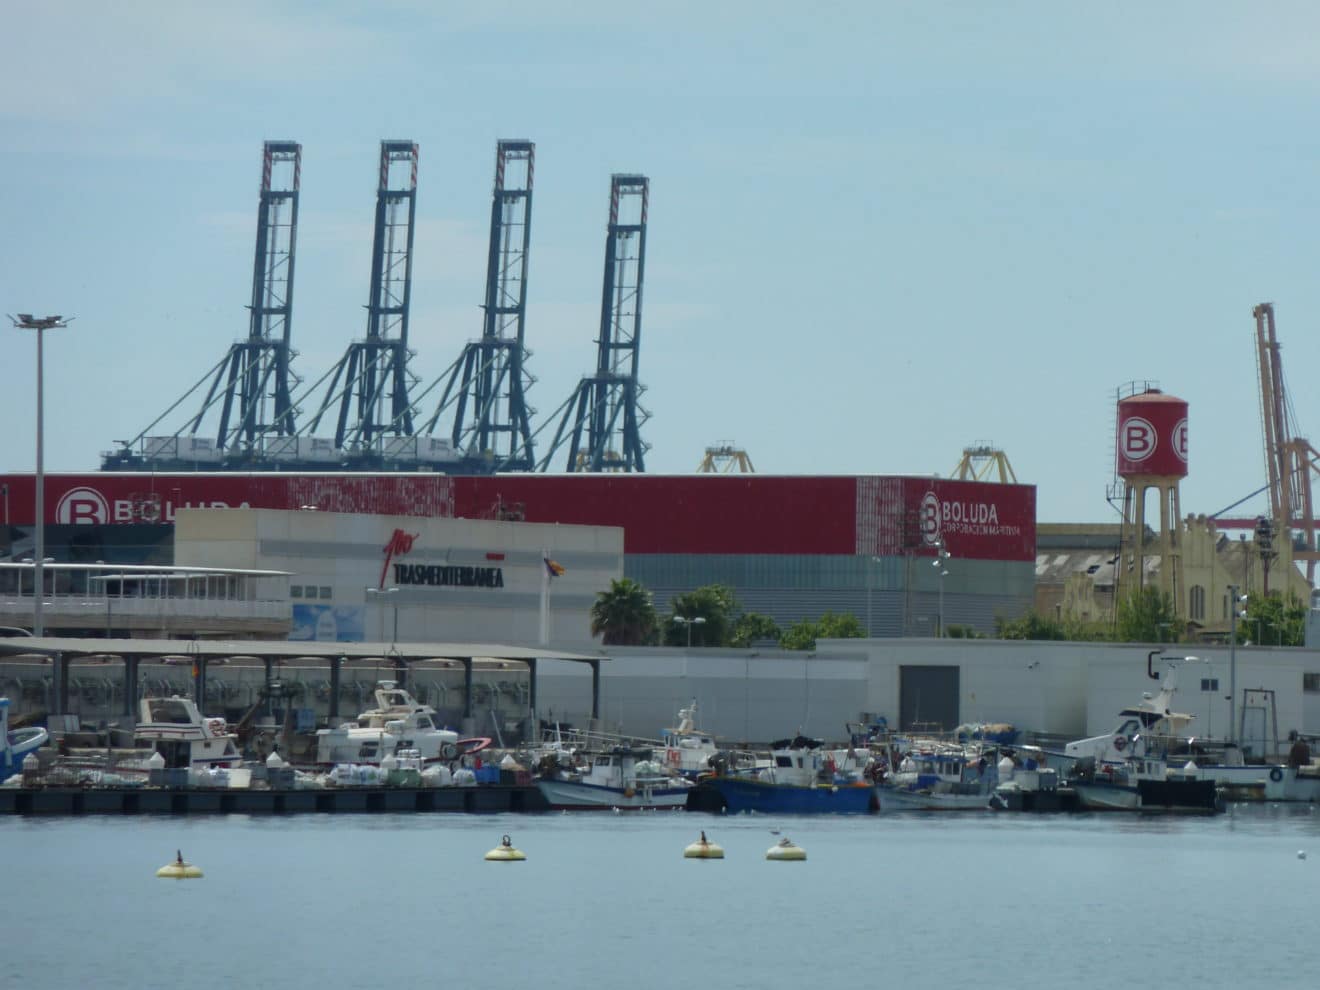 Ports Of Genoa Records +6% In November Cargo Traffic